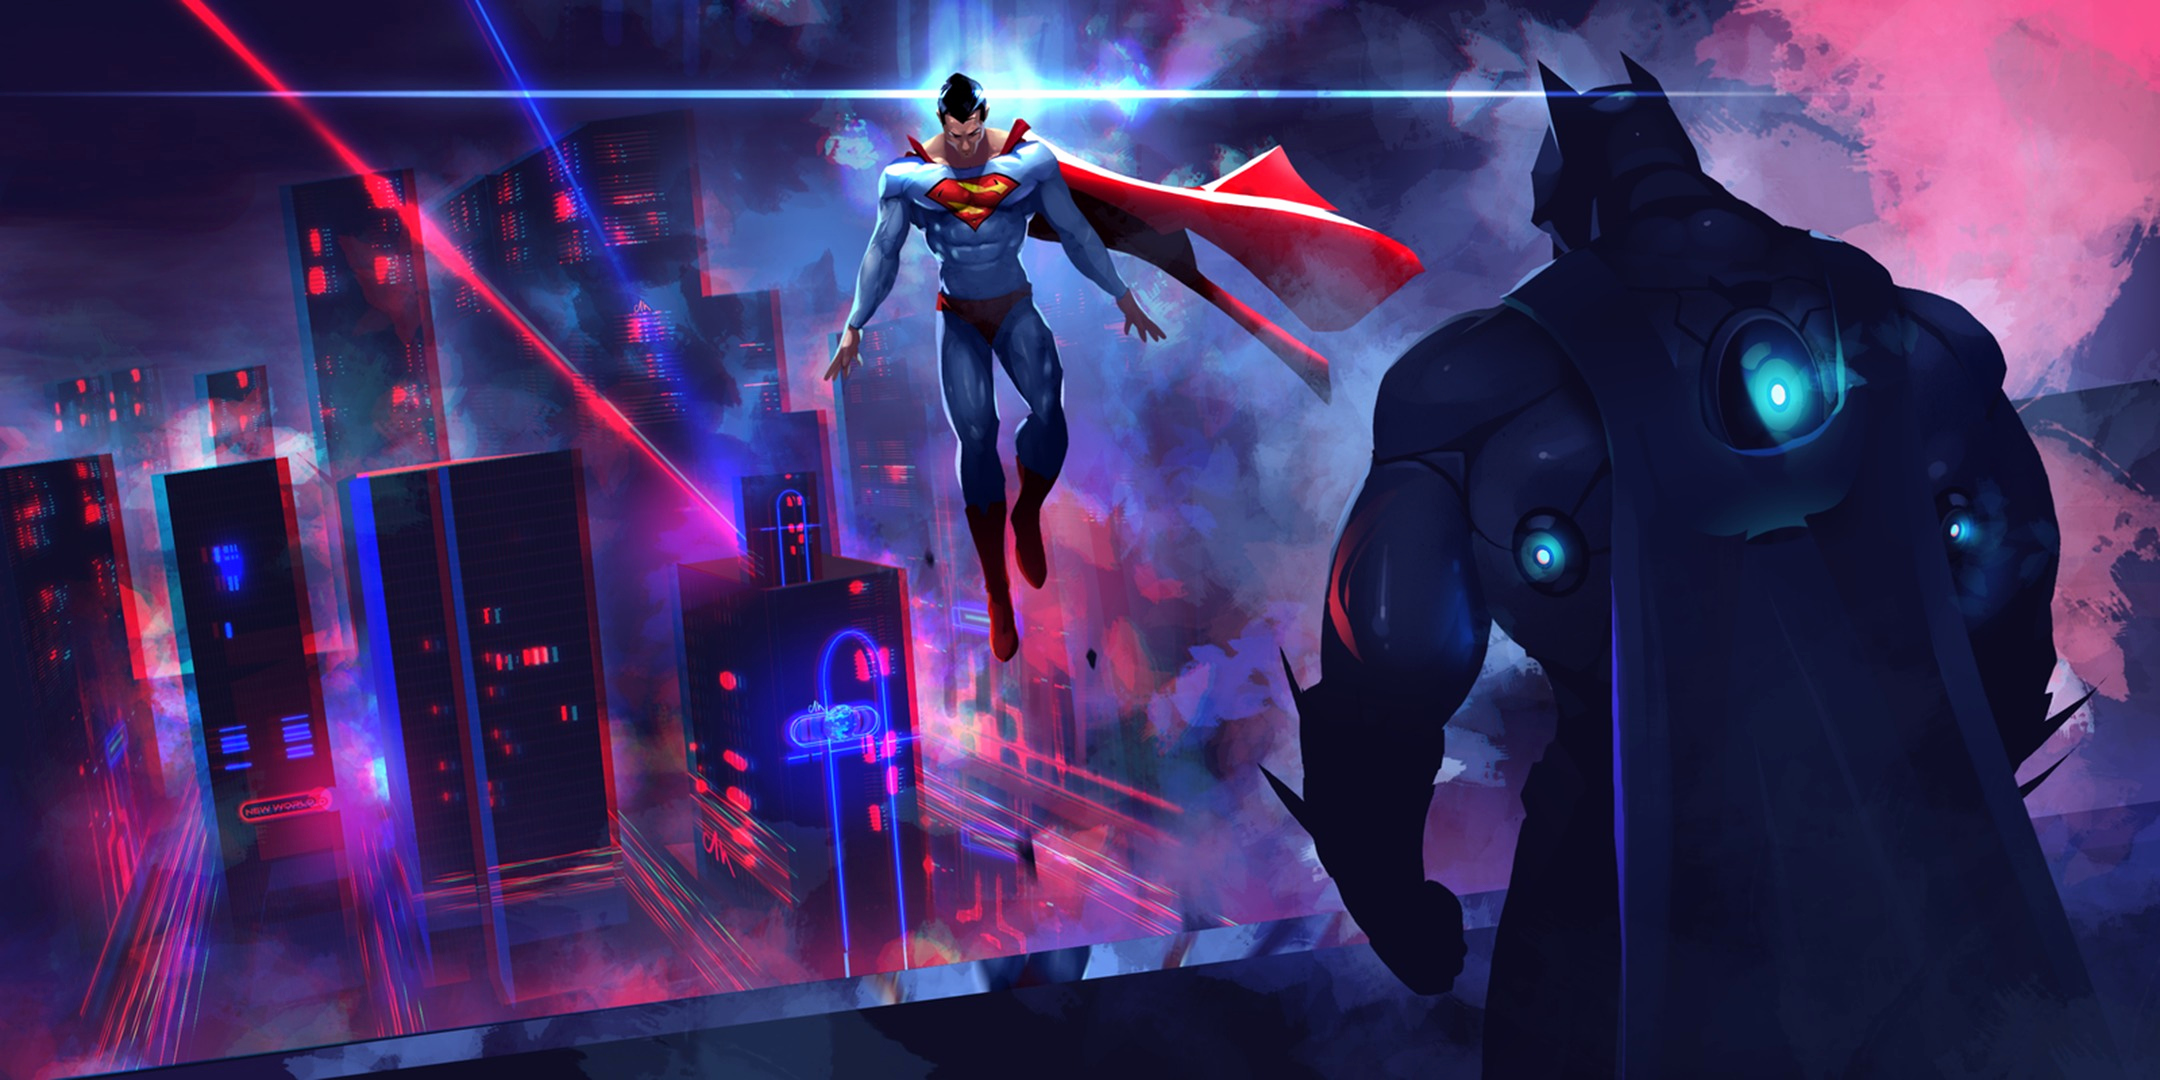 iPhone Retina Wallpapers  Batman and superman, Superman artwork, Batman vs  superman